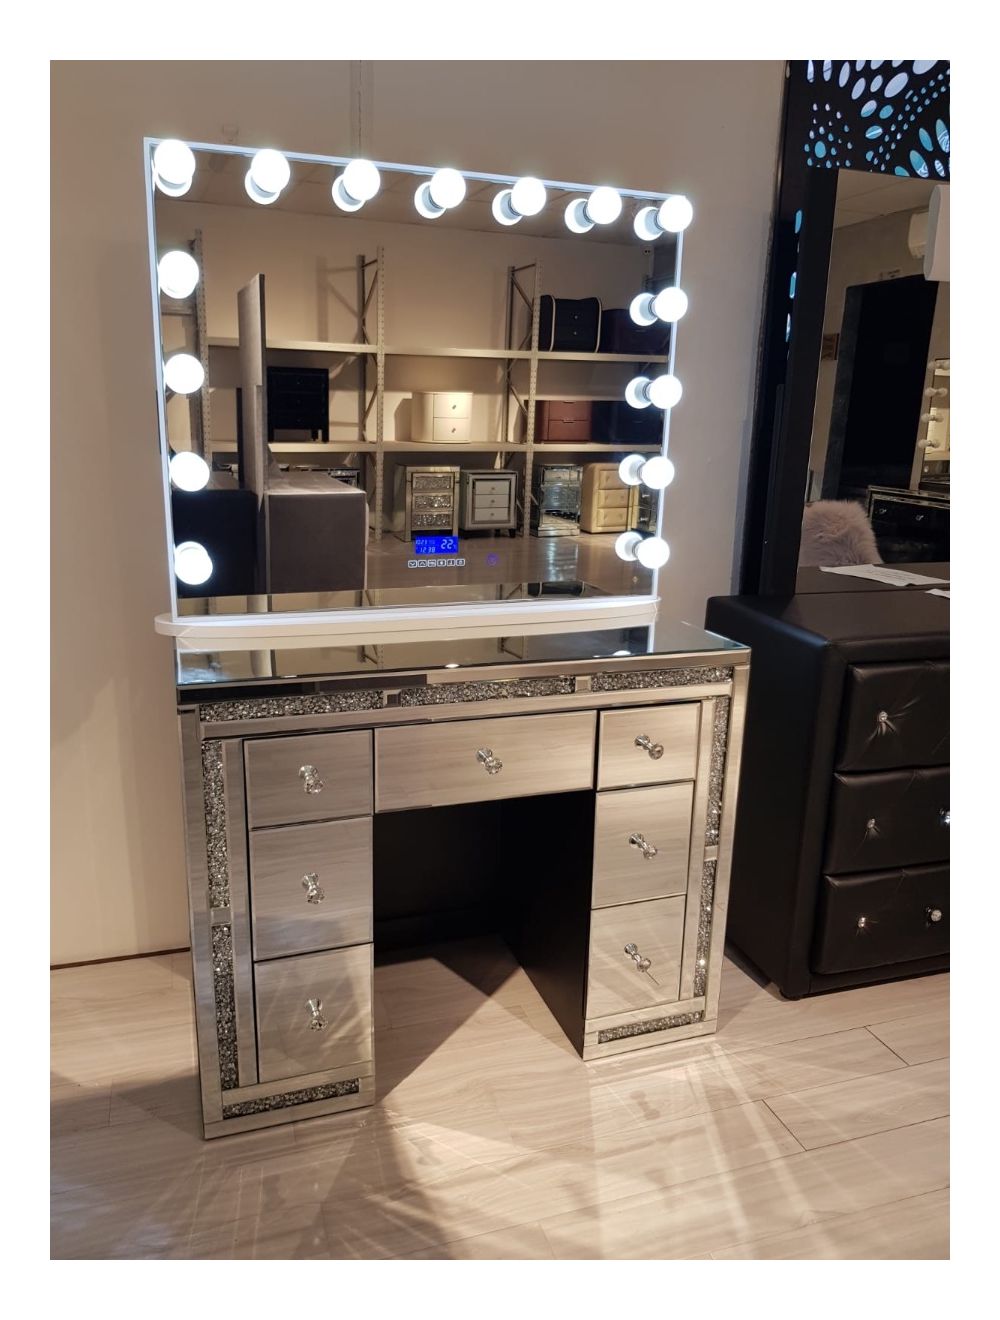 Full Function Bluetooth Makeup Mirror, Dresser Top Vanity Mirror